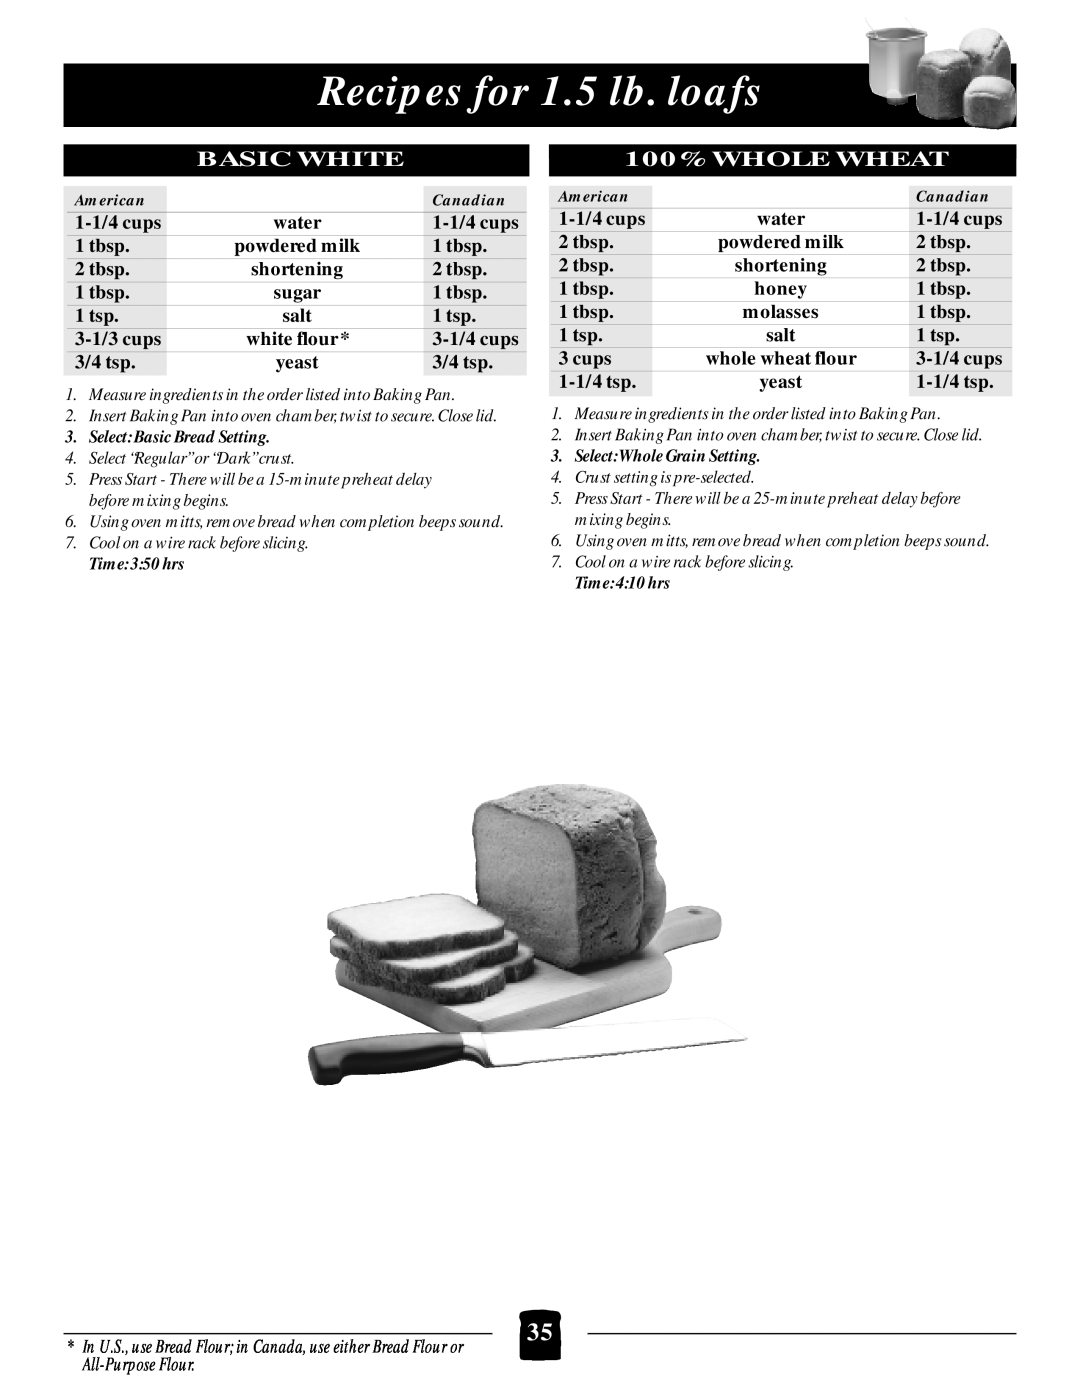 Black & Decker B1650 manual Recipes for 1.5 lb. loafs, Basic White, 100% WHOLE WHEAT 